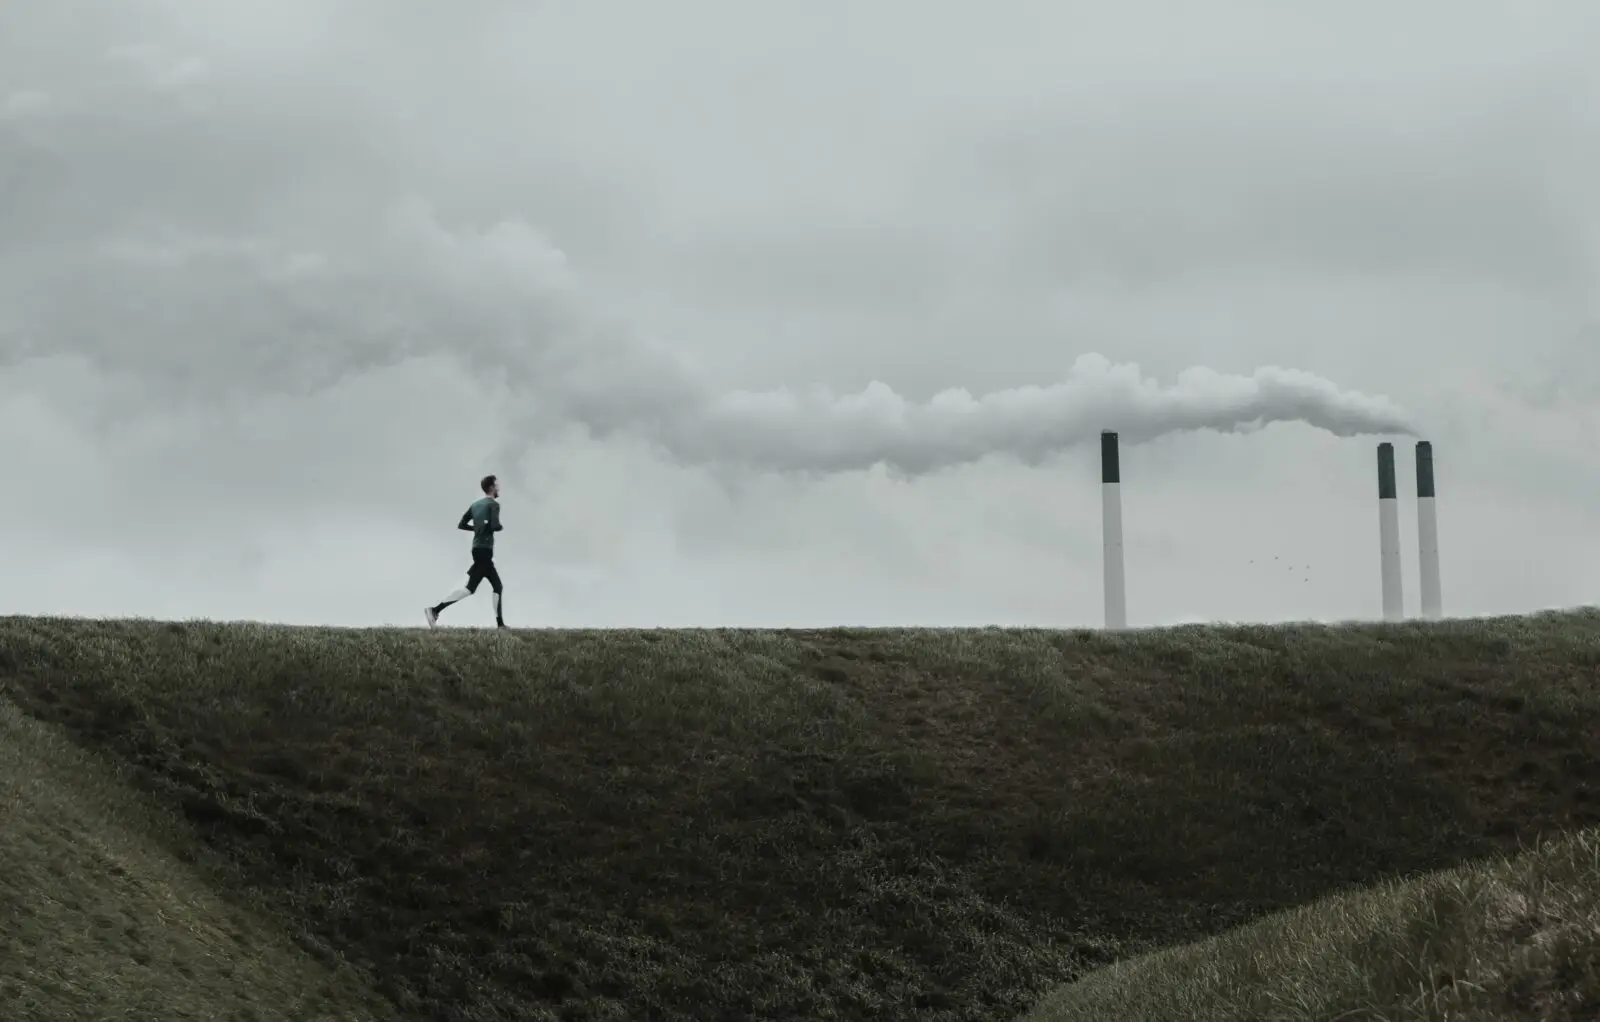 A man running next to a refinery